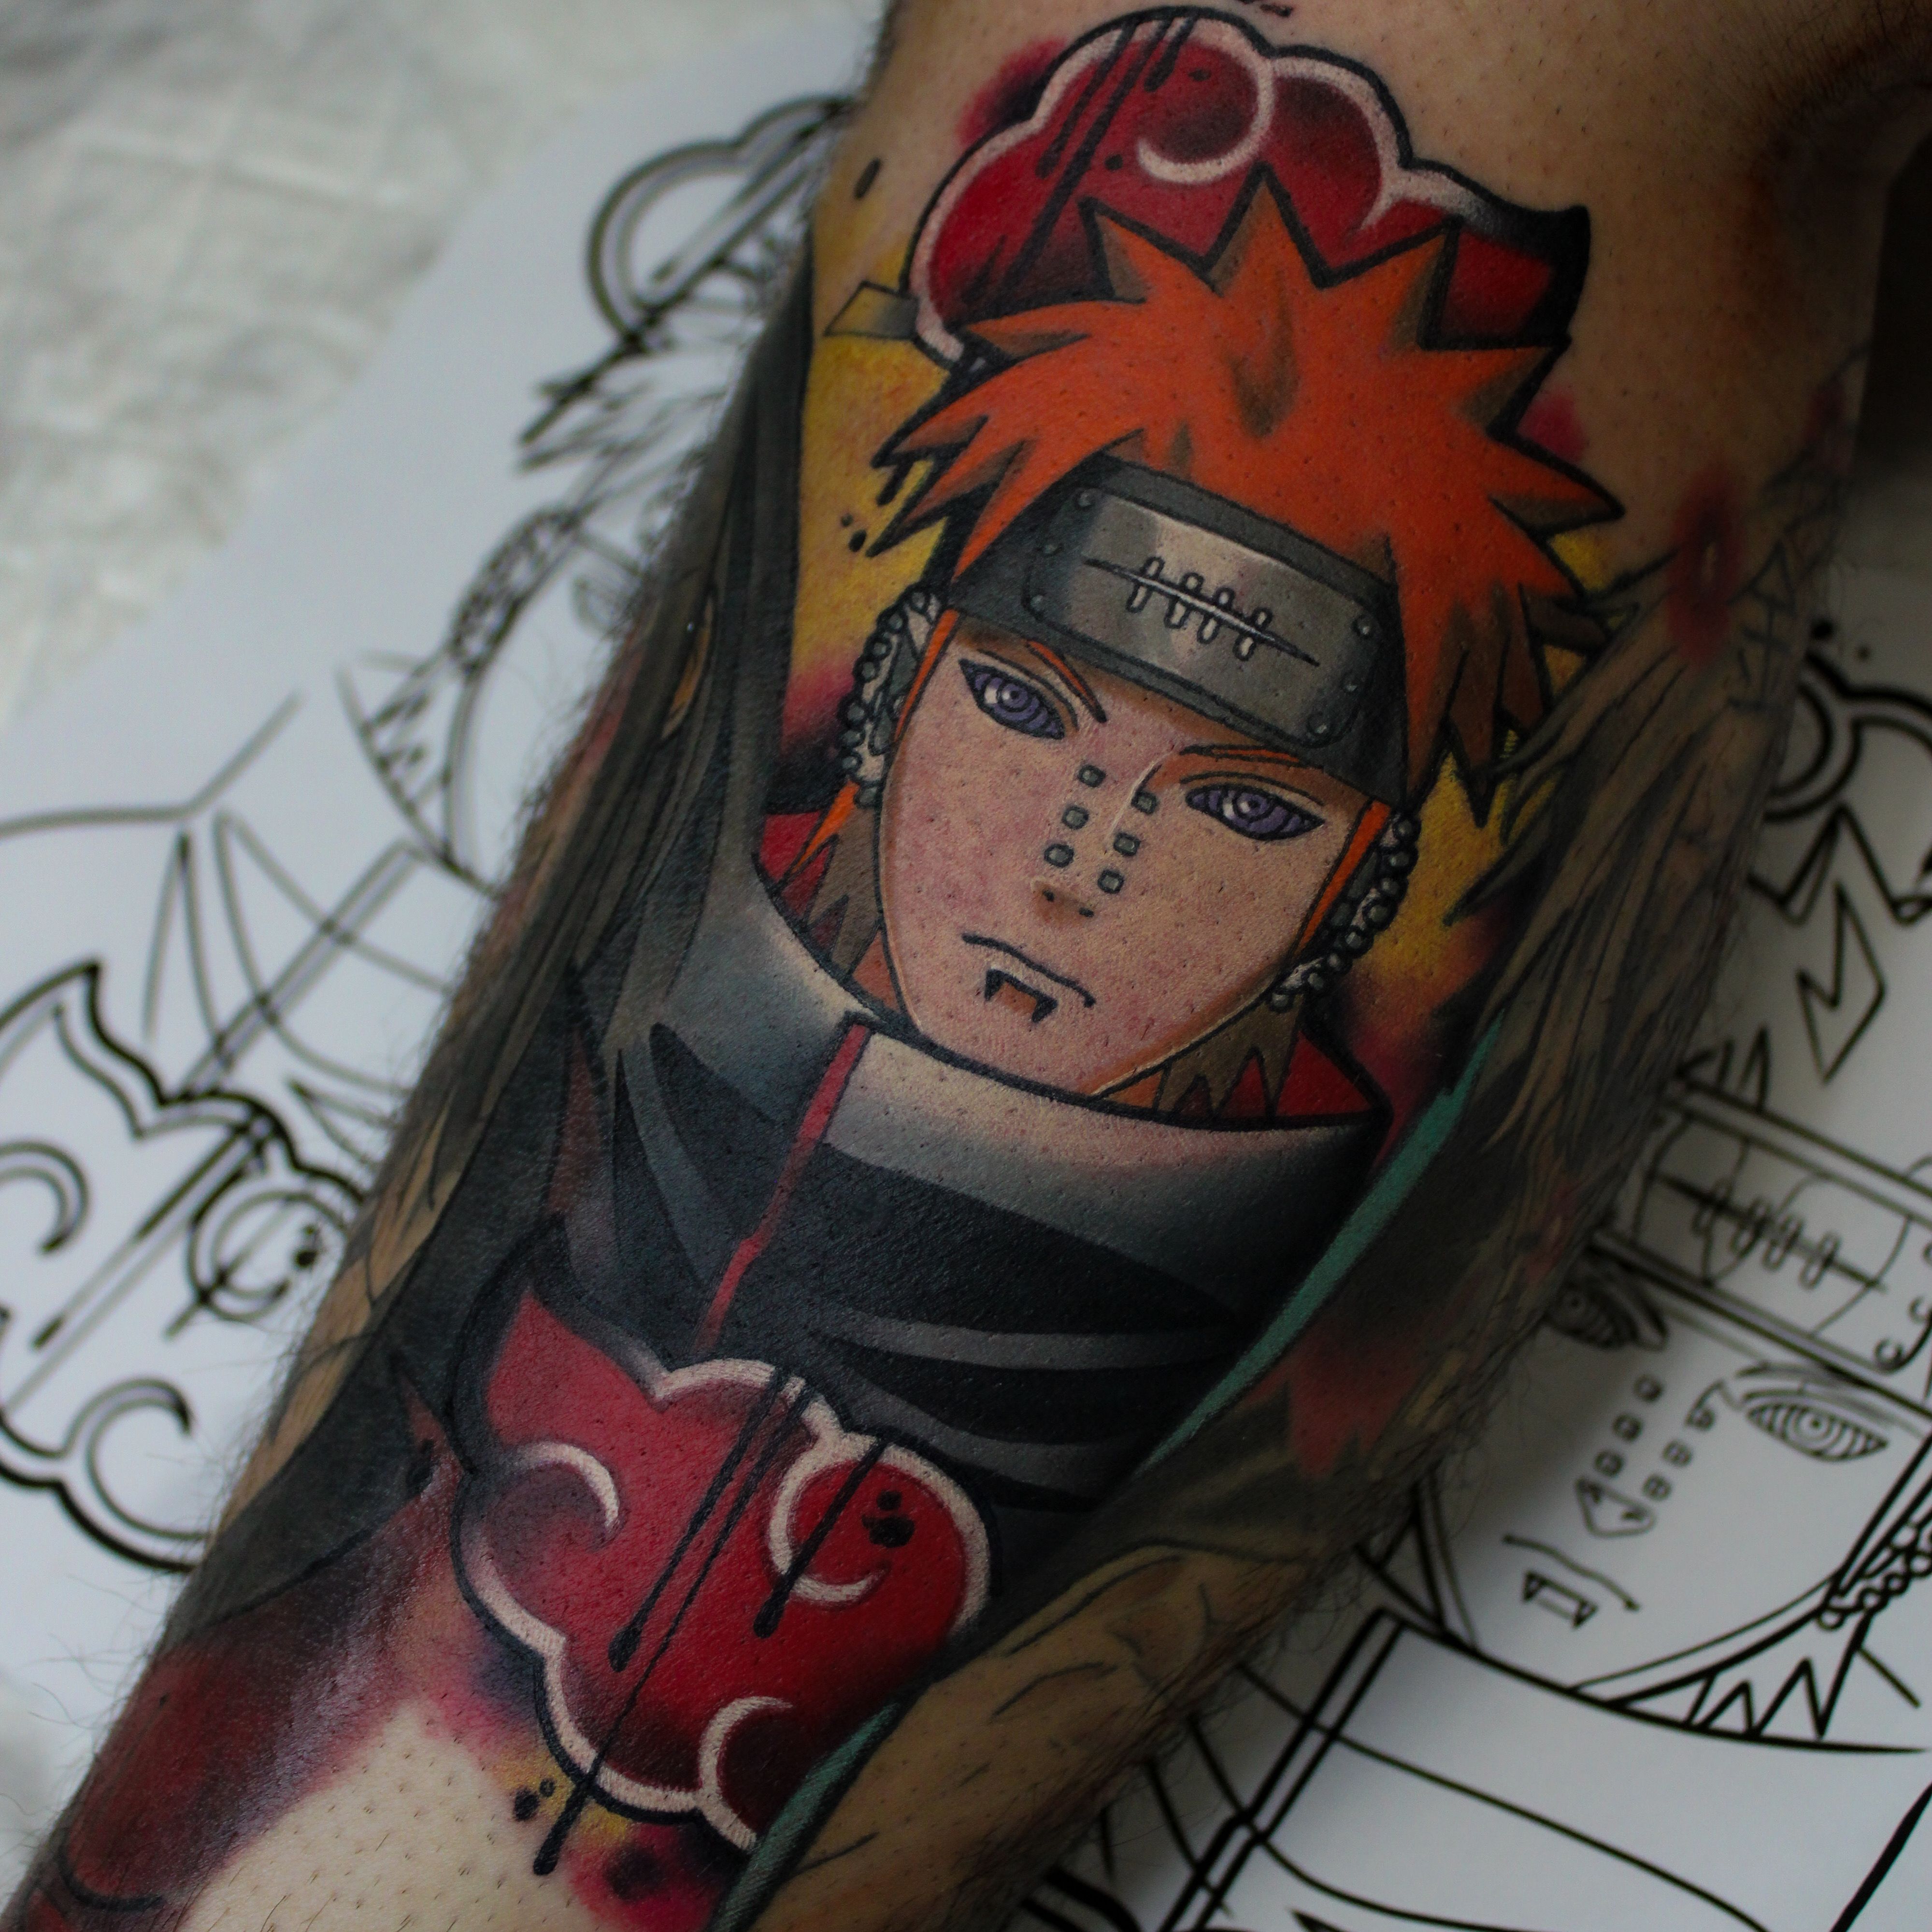 27 Minimalist Naruto Tattoos That Subtly Pay Homage